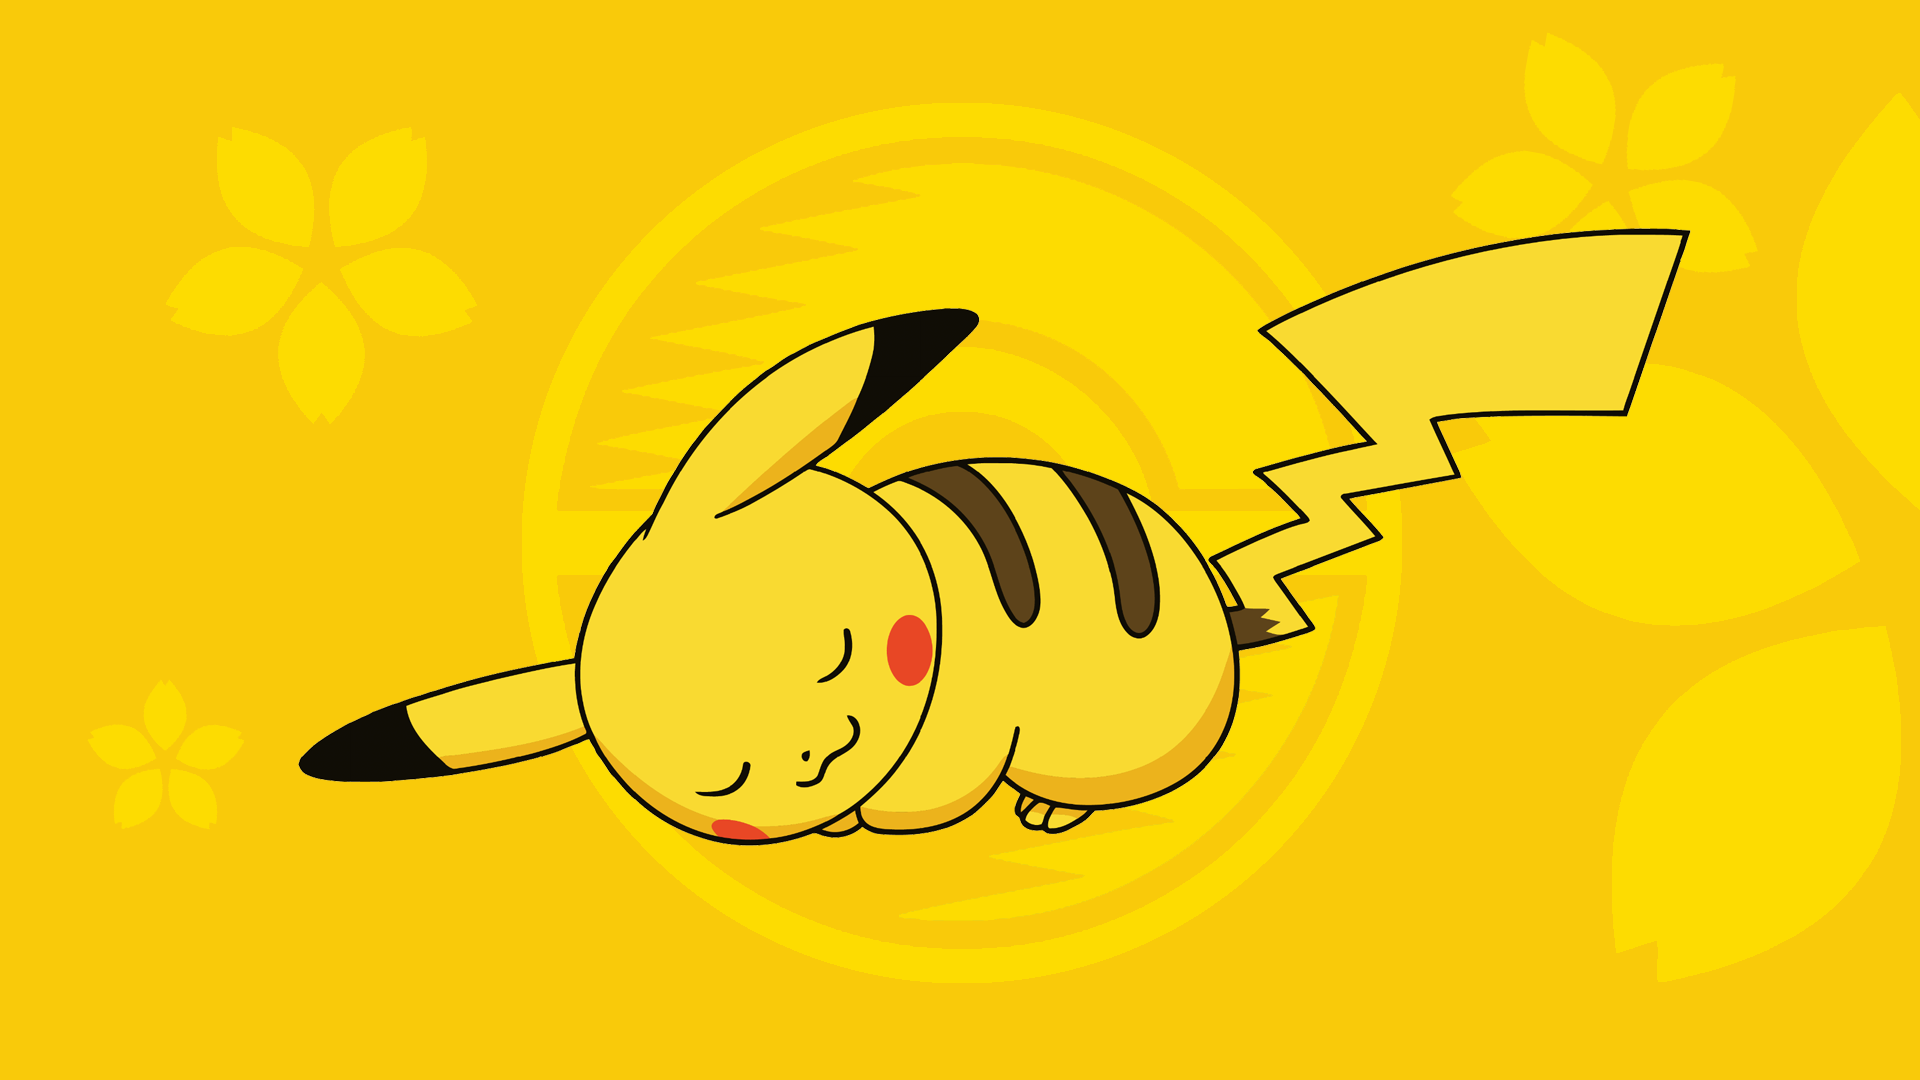 Sleep Pikachu Pokemon Wallpaper Wallpaperlepi